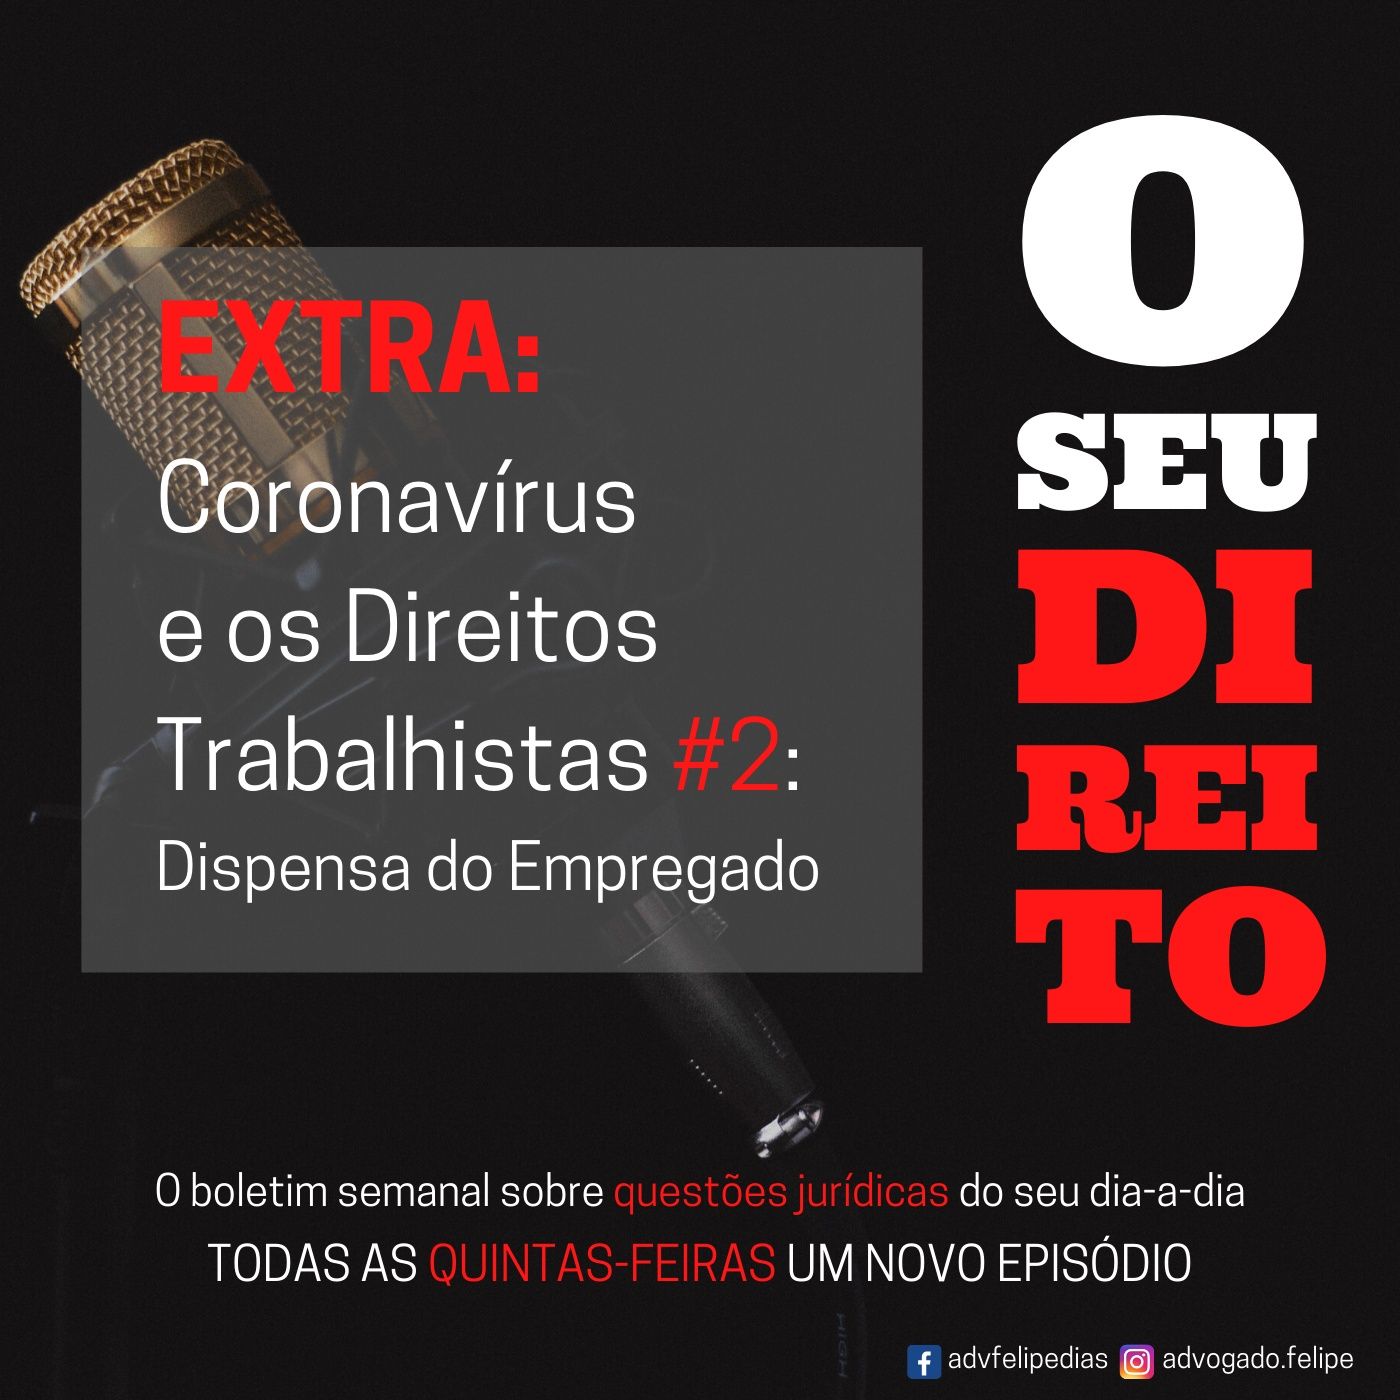 EXTRA #2 - Corona Virus e os Direitos Trabalhistas #2: Dispensa do Empregado